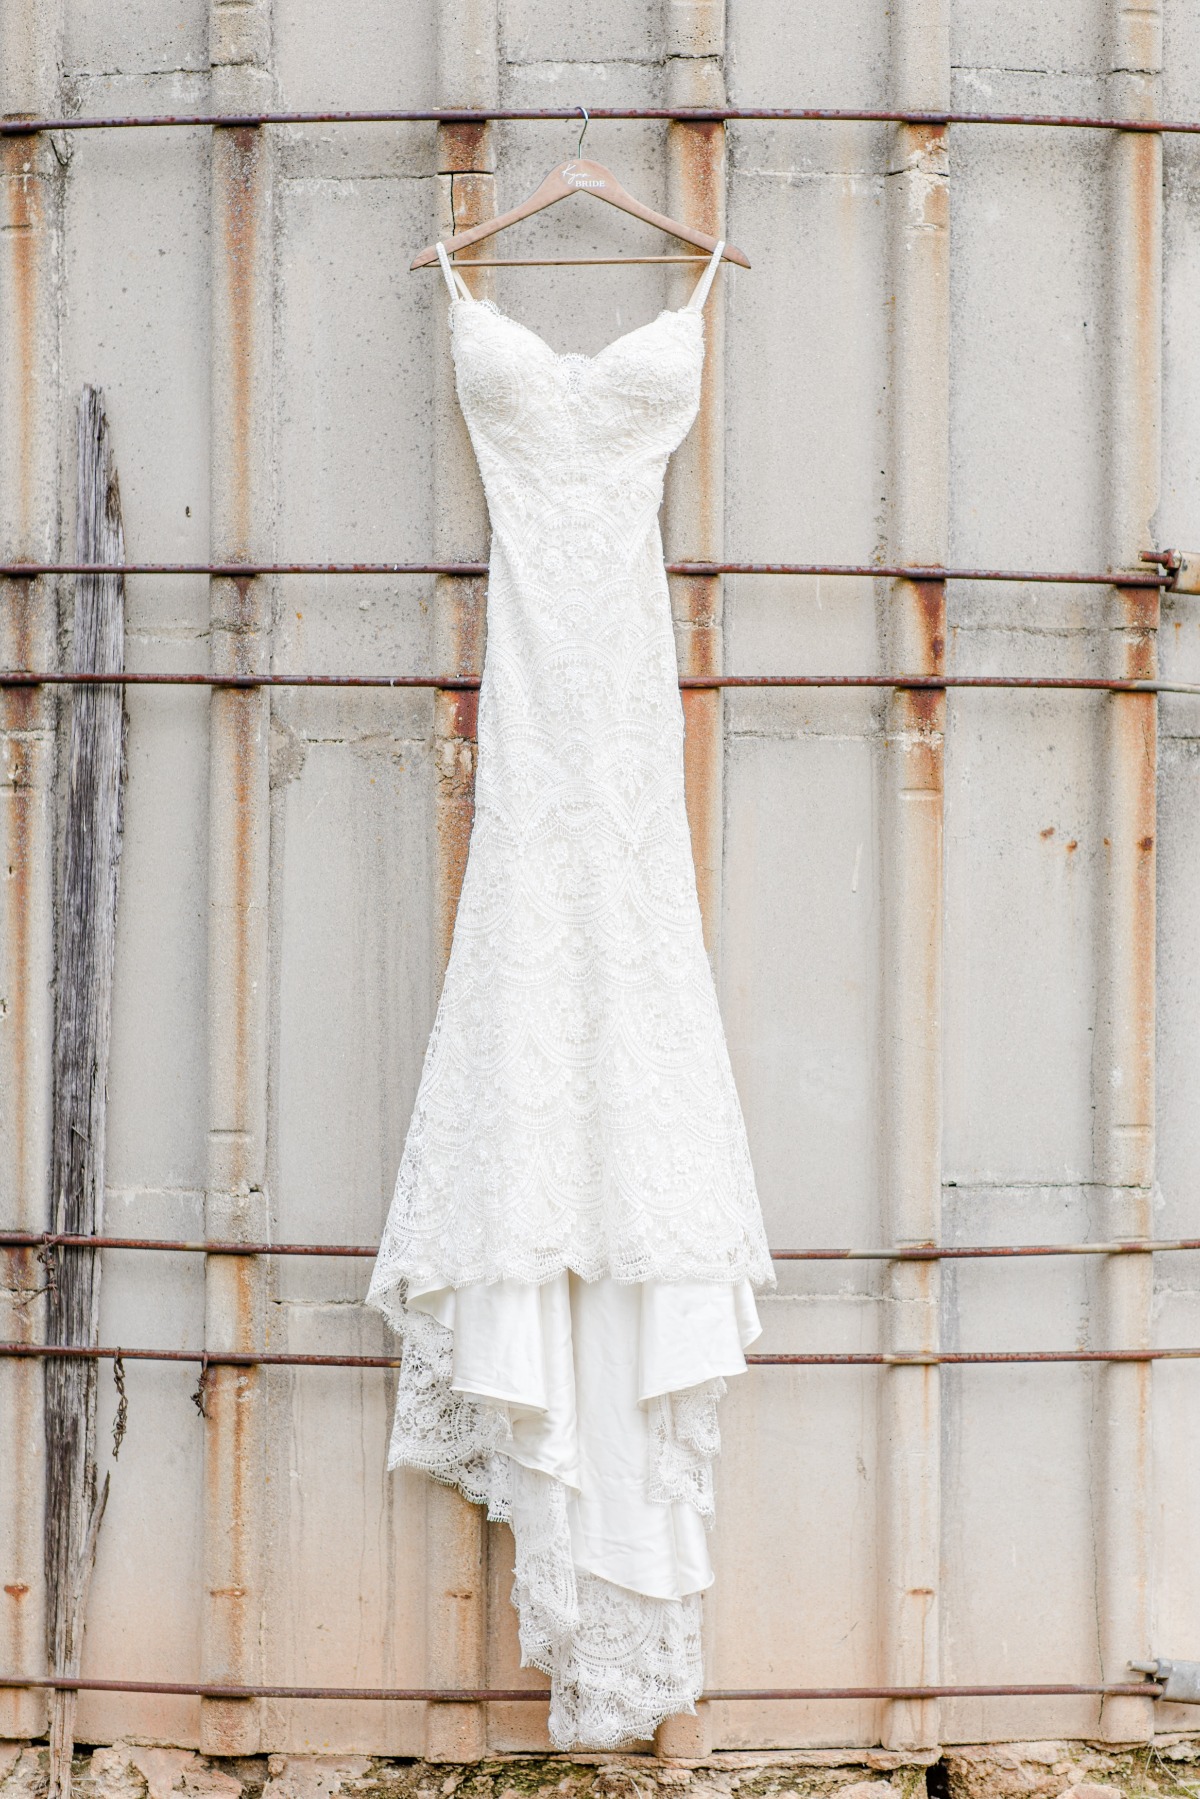 Intricate lace wedding dress